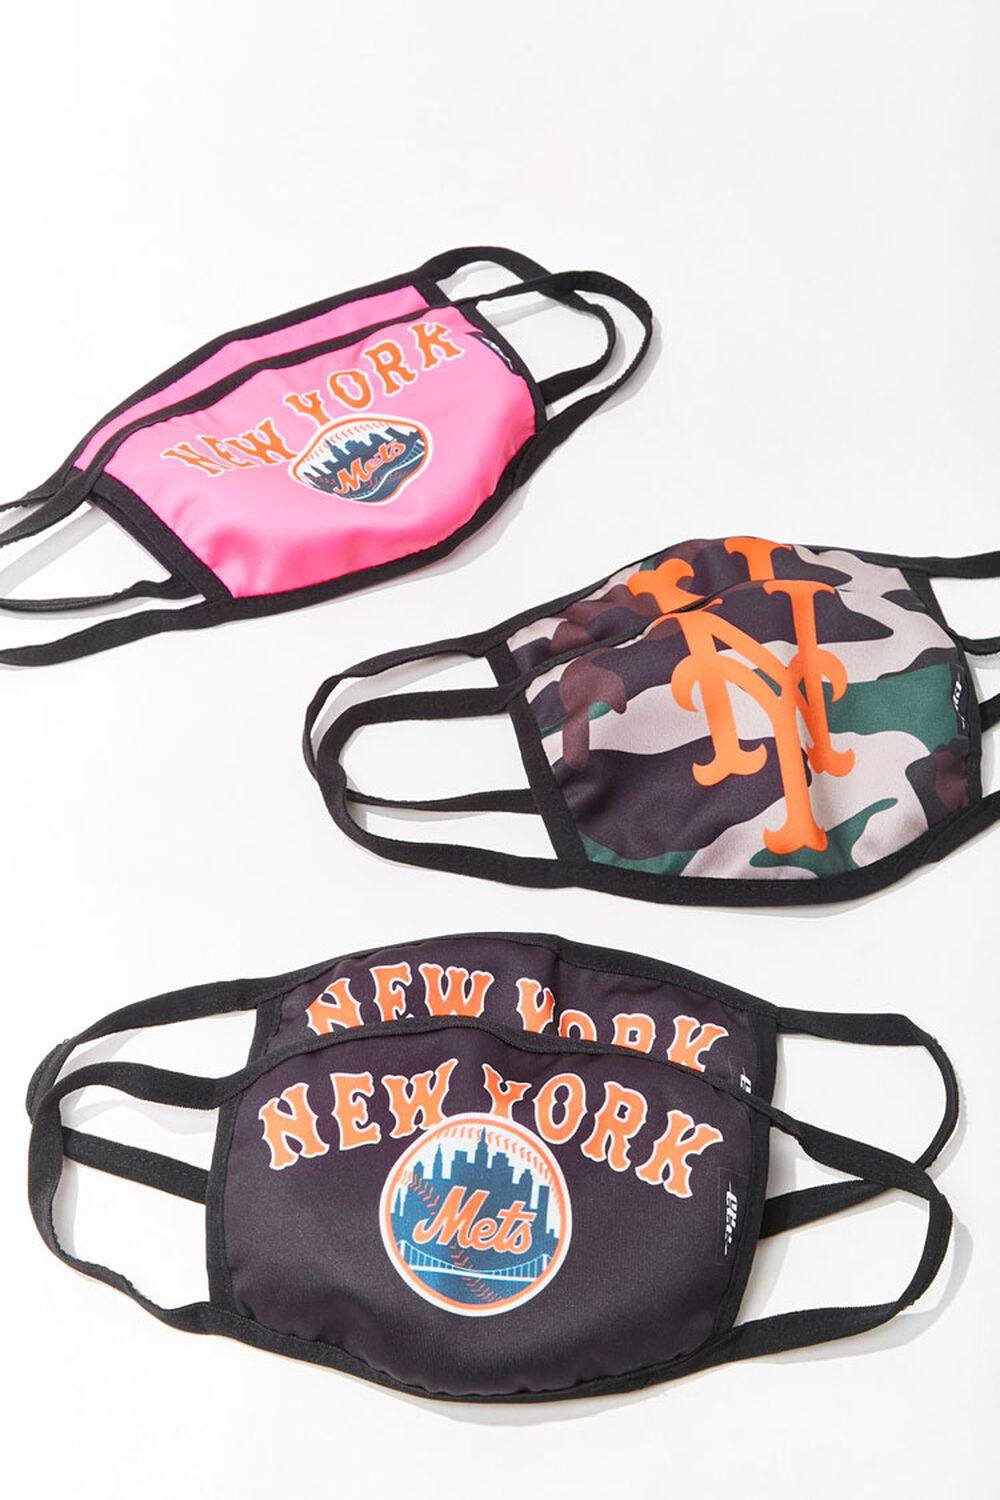 New York Mets Face Mask Set - Assorted 2 Pack, image 1